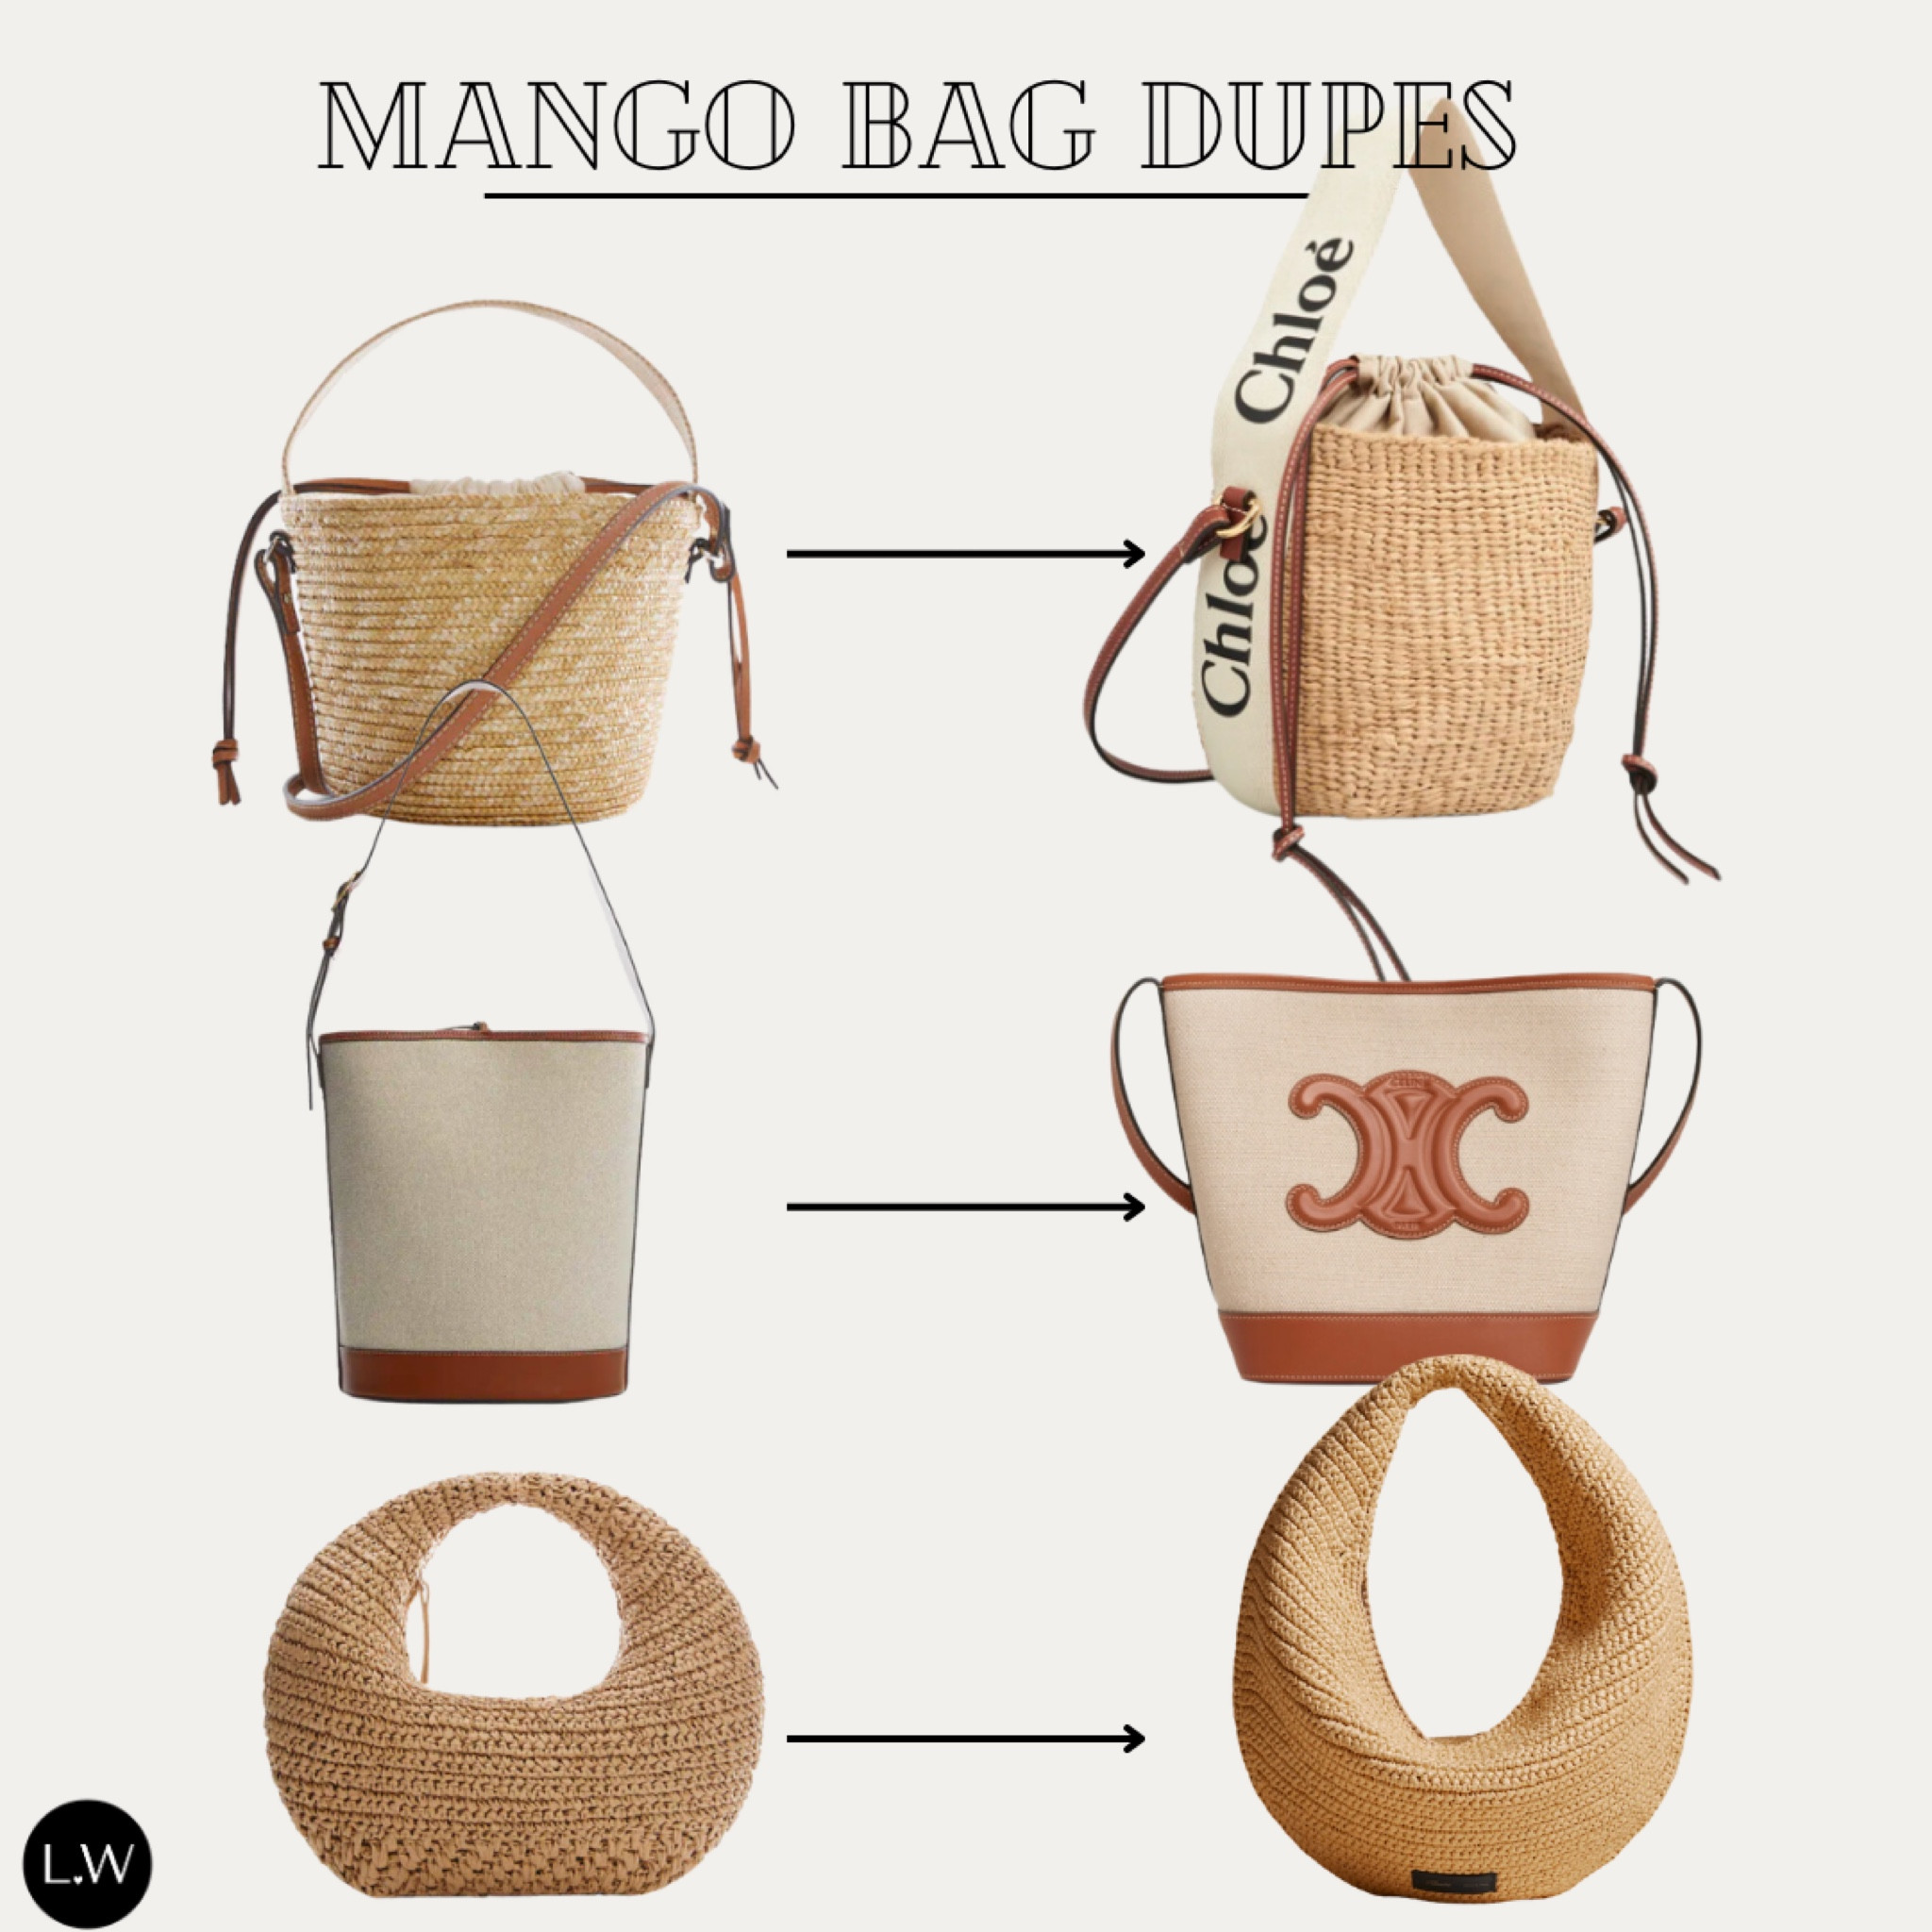 Mango launches Celine bag dupe range - The Mail